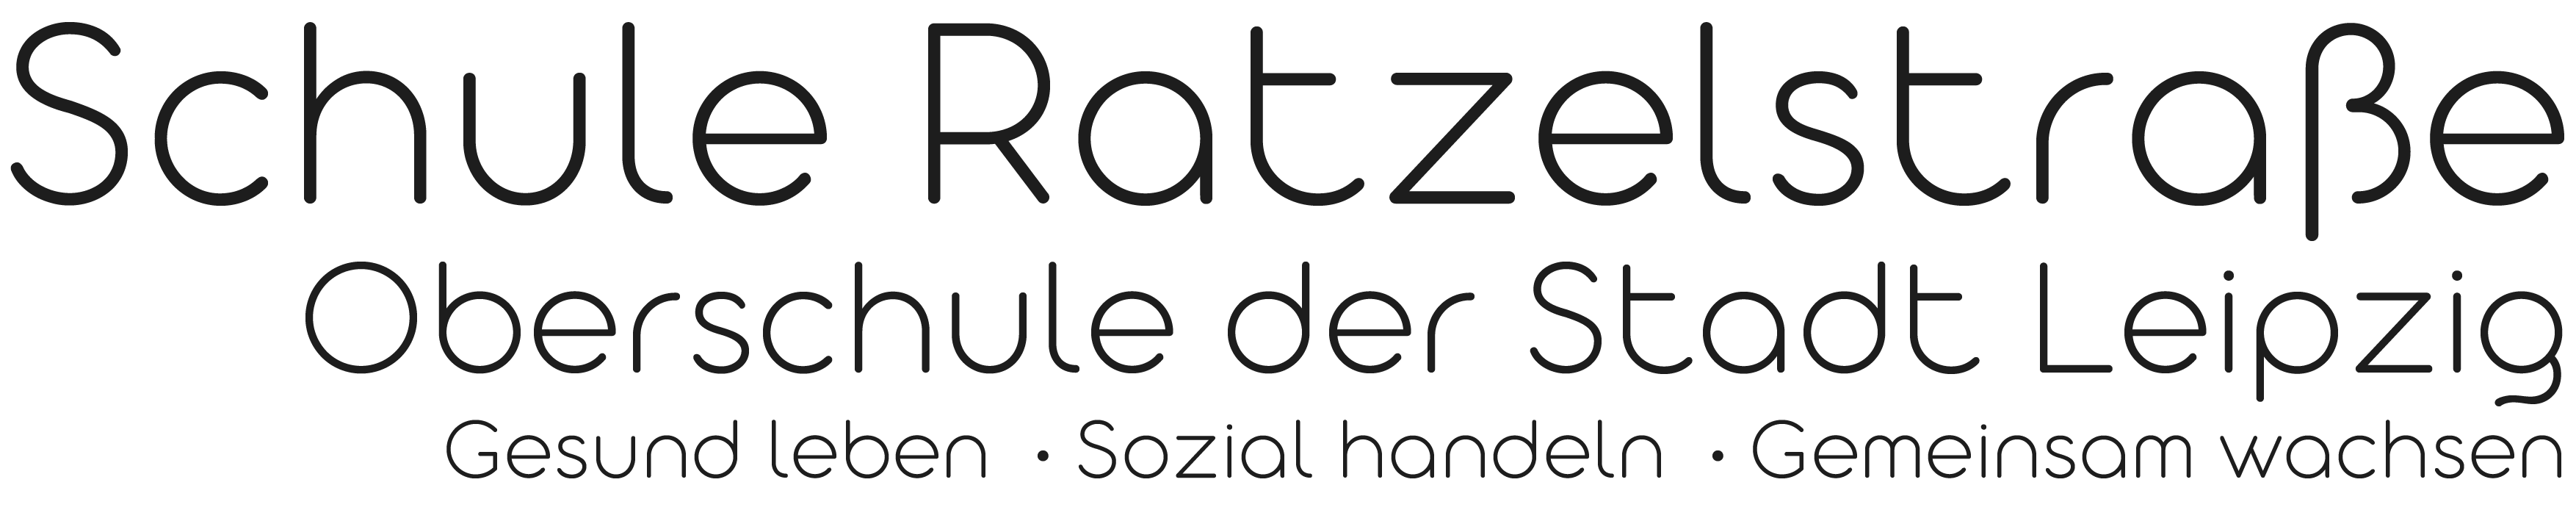 Schule Ratzelstraße - Oberschule der Stadt Leipzig 